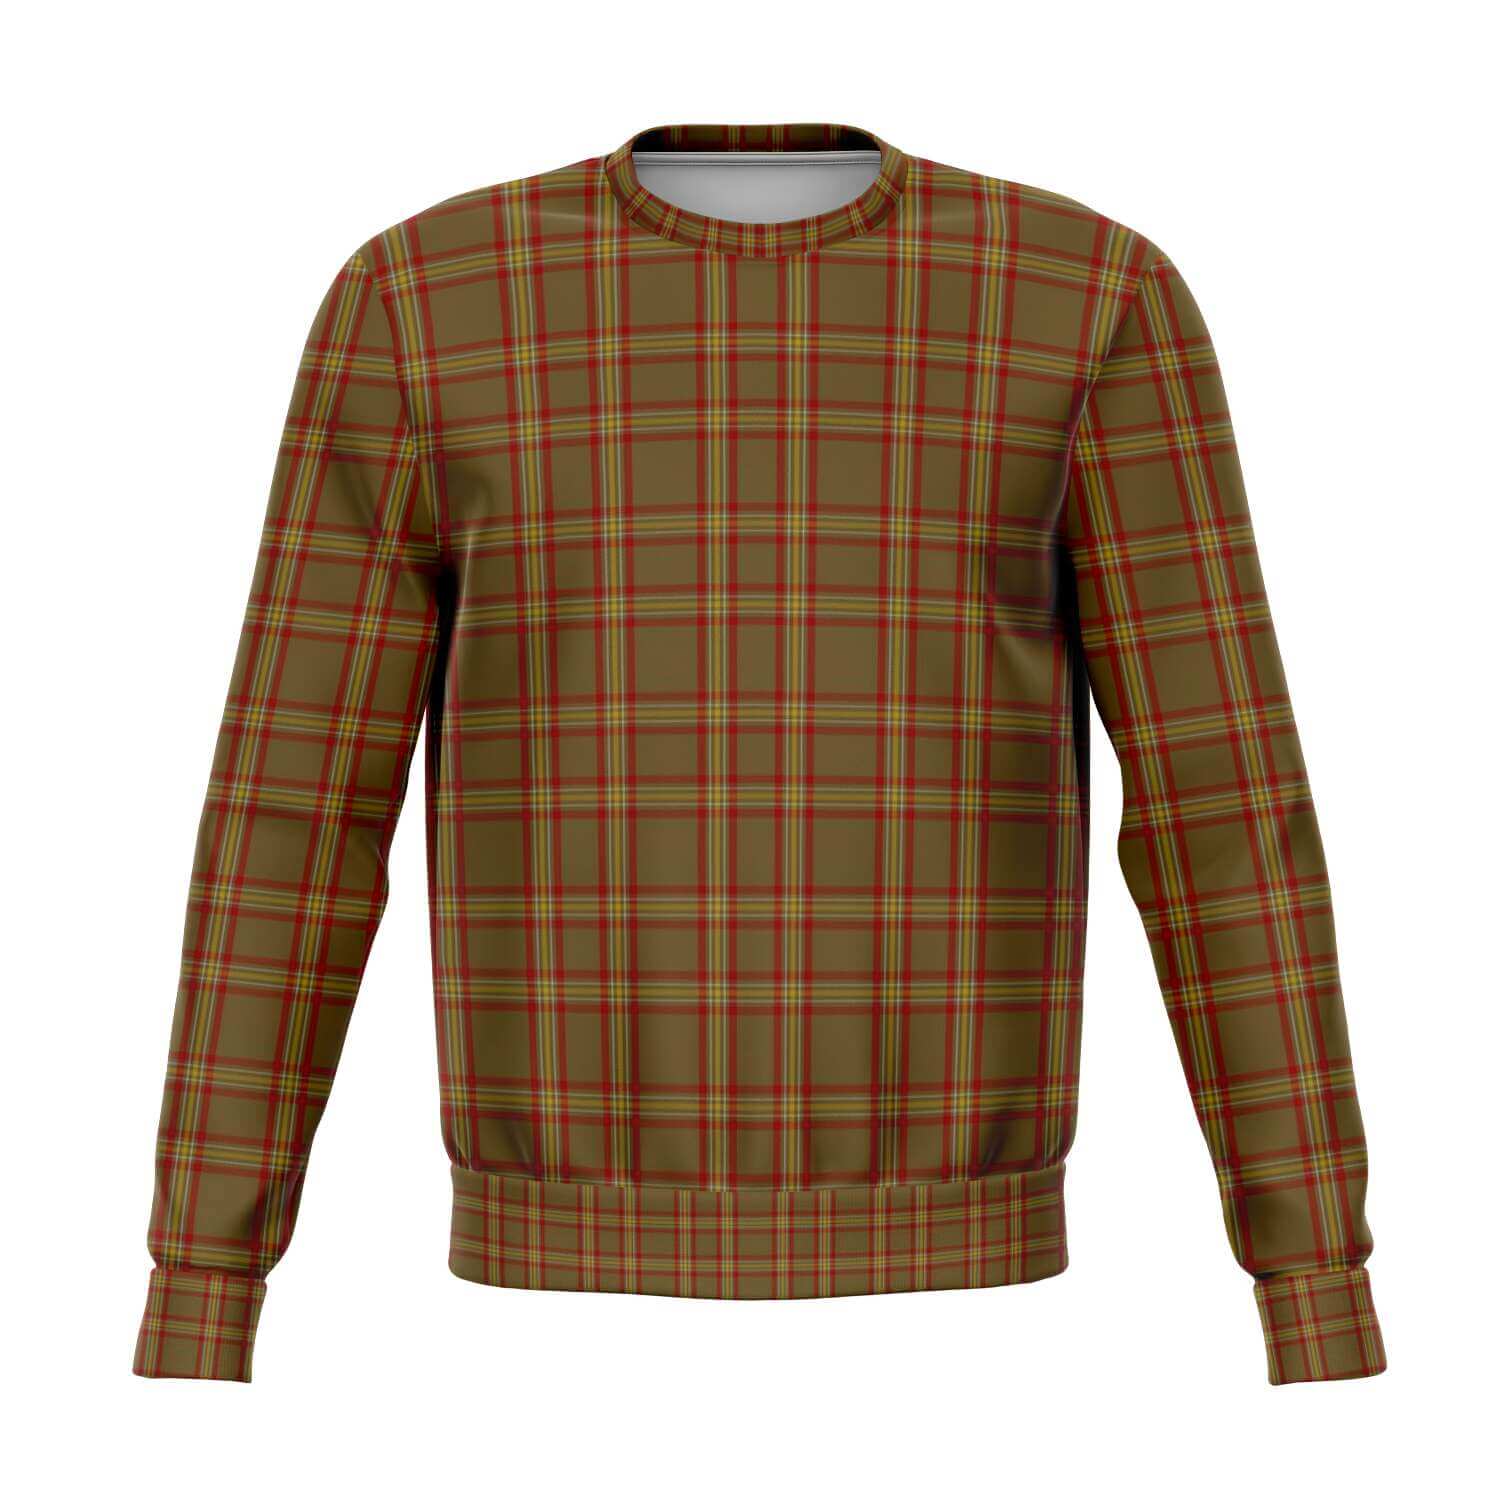 Reid-Tartan-sweatshirt-front